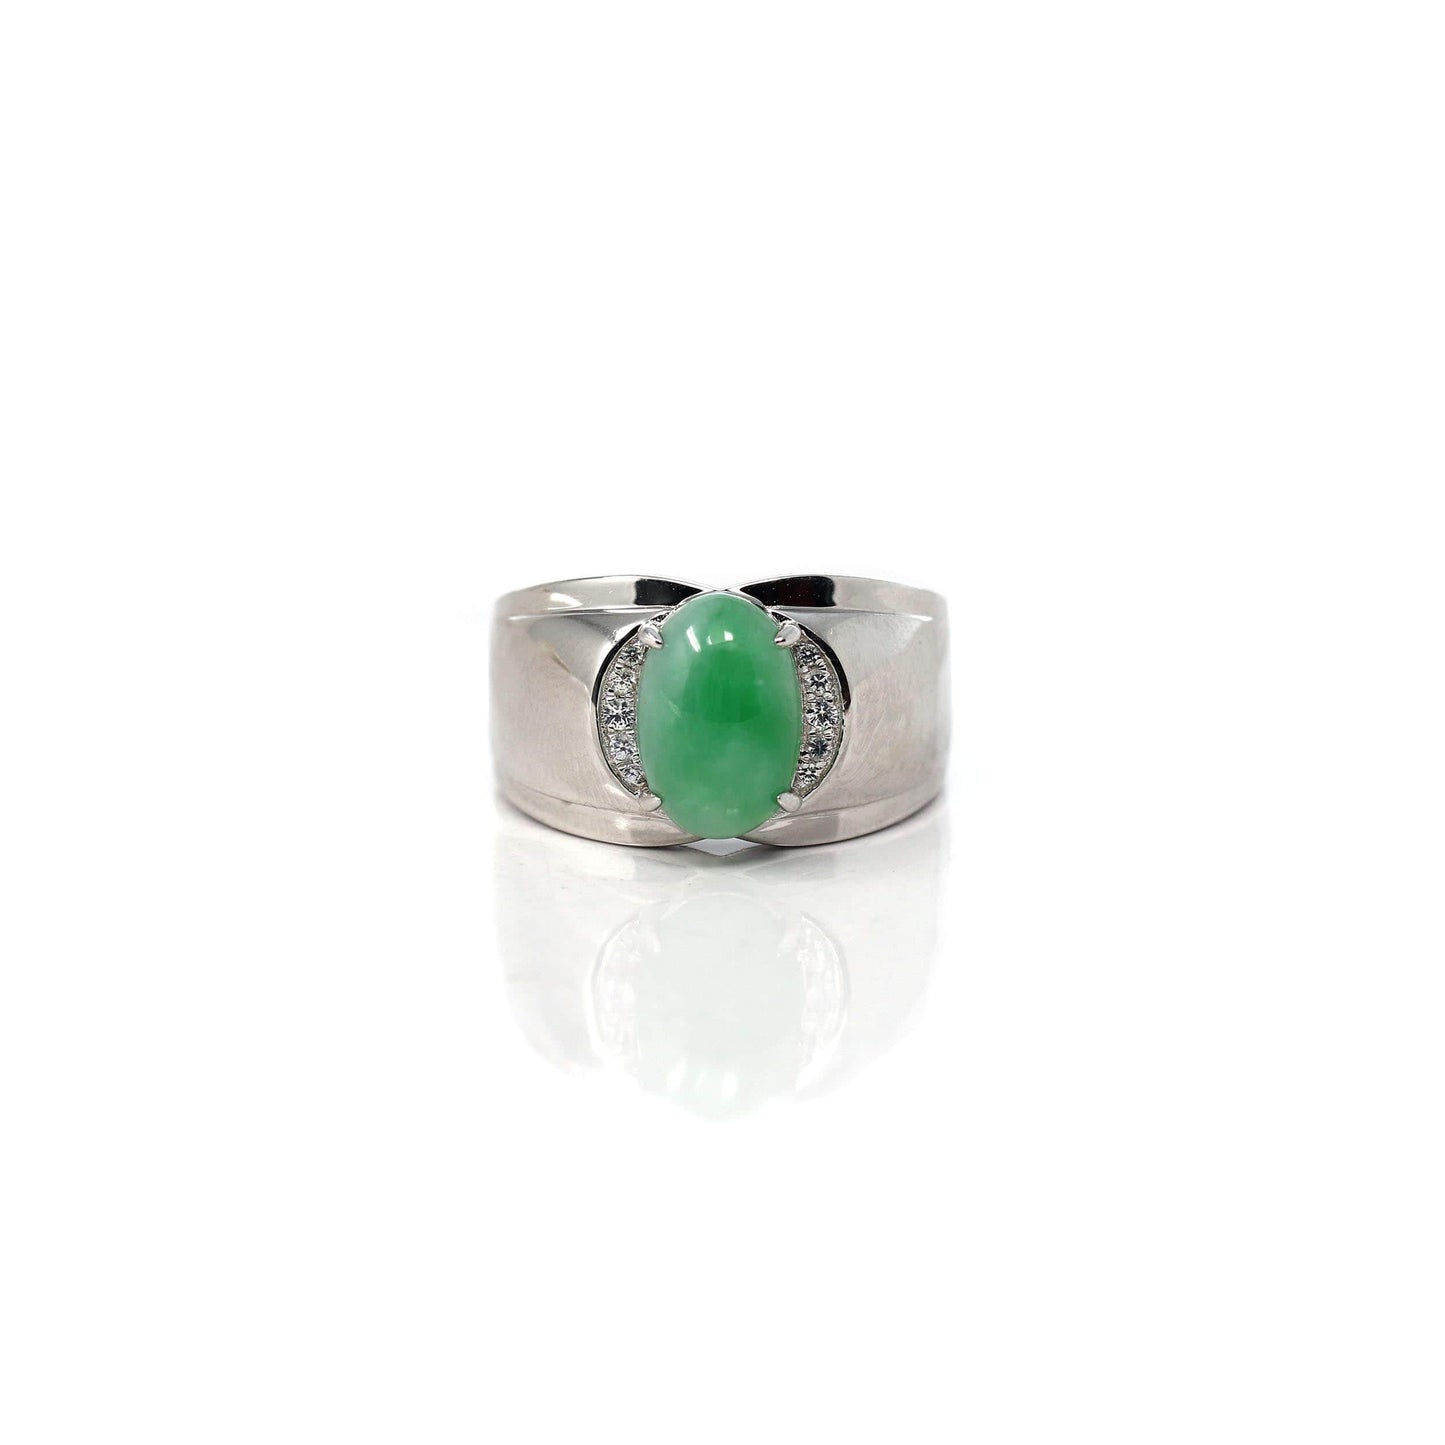 RealJade® Co. RealJade® Co. Sterling Silver Genuine Green Jadeite Jade Men's Ring with White Sapphire